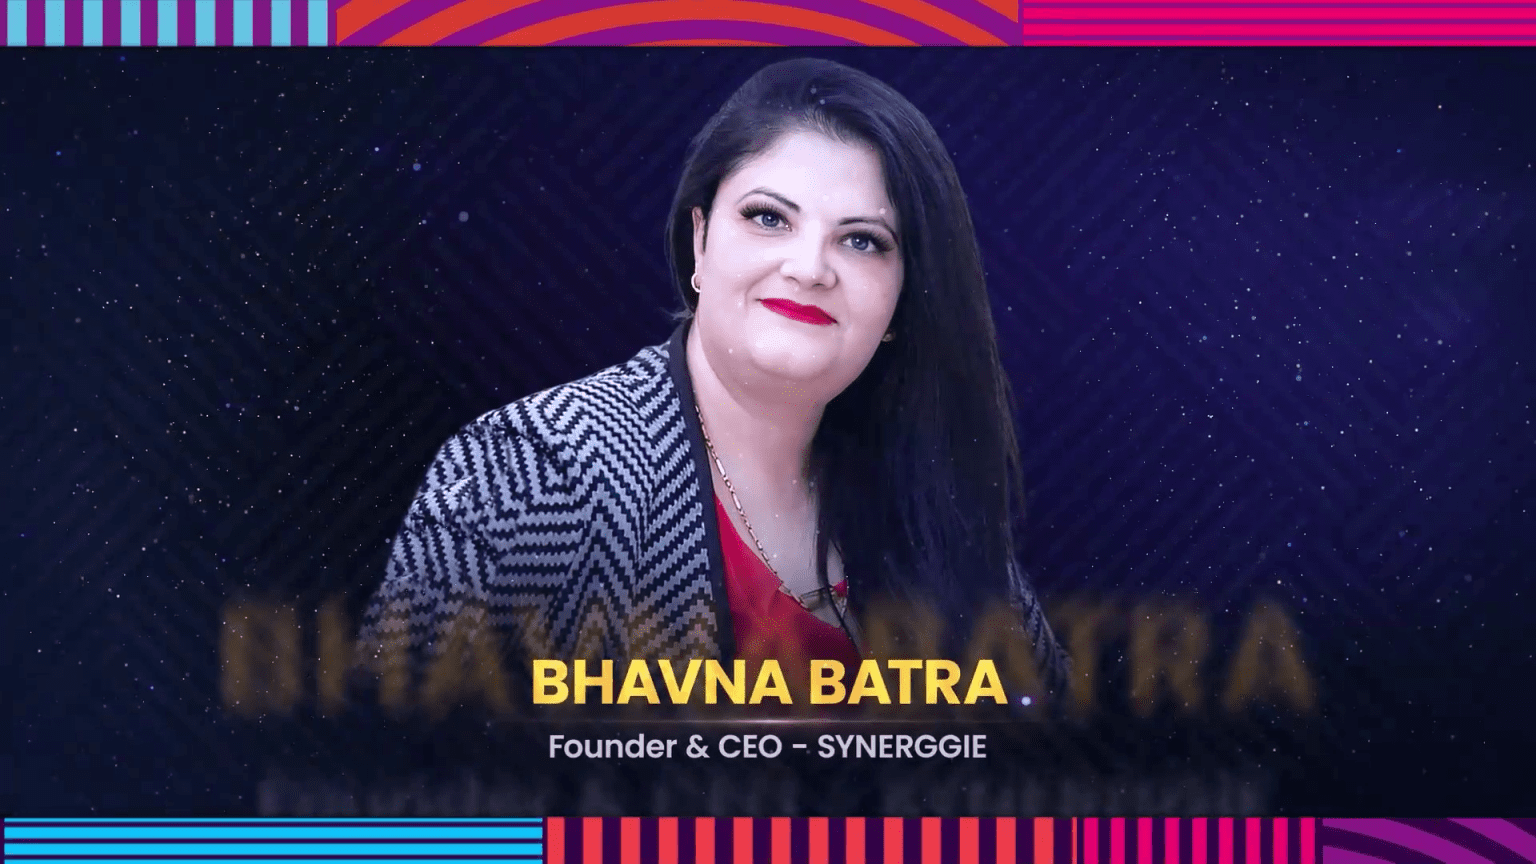 Bhavna batra of synerggie wins womenpreneur award